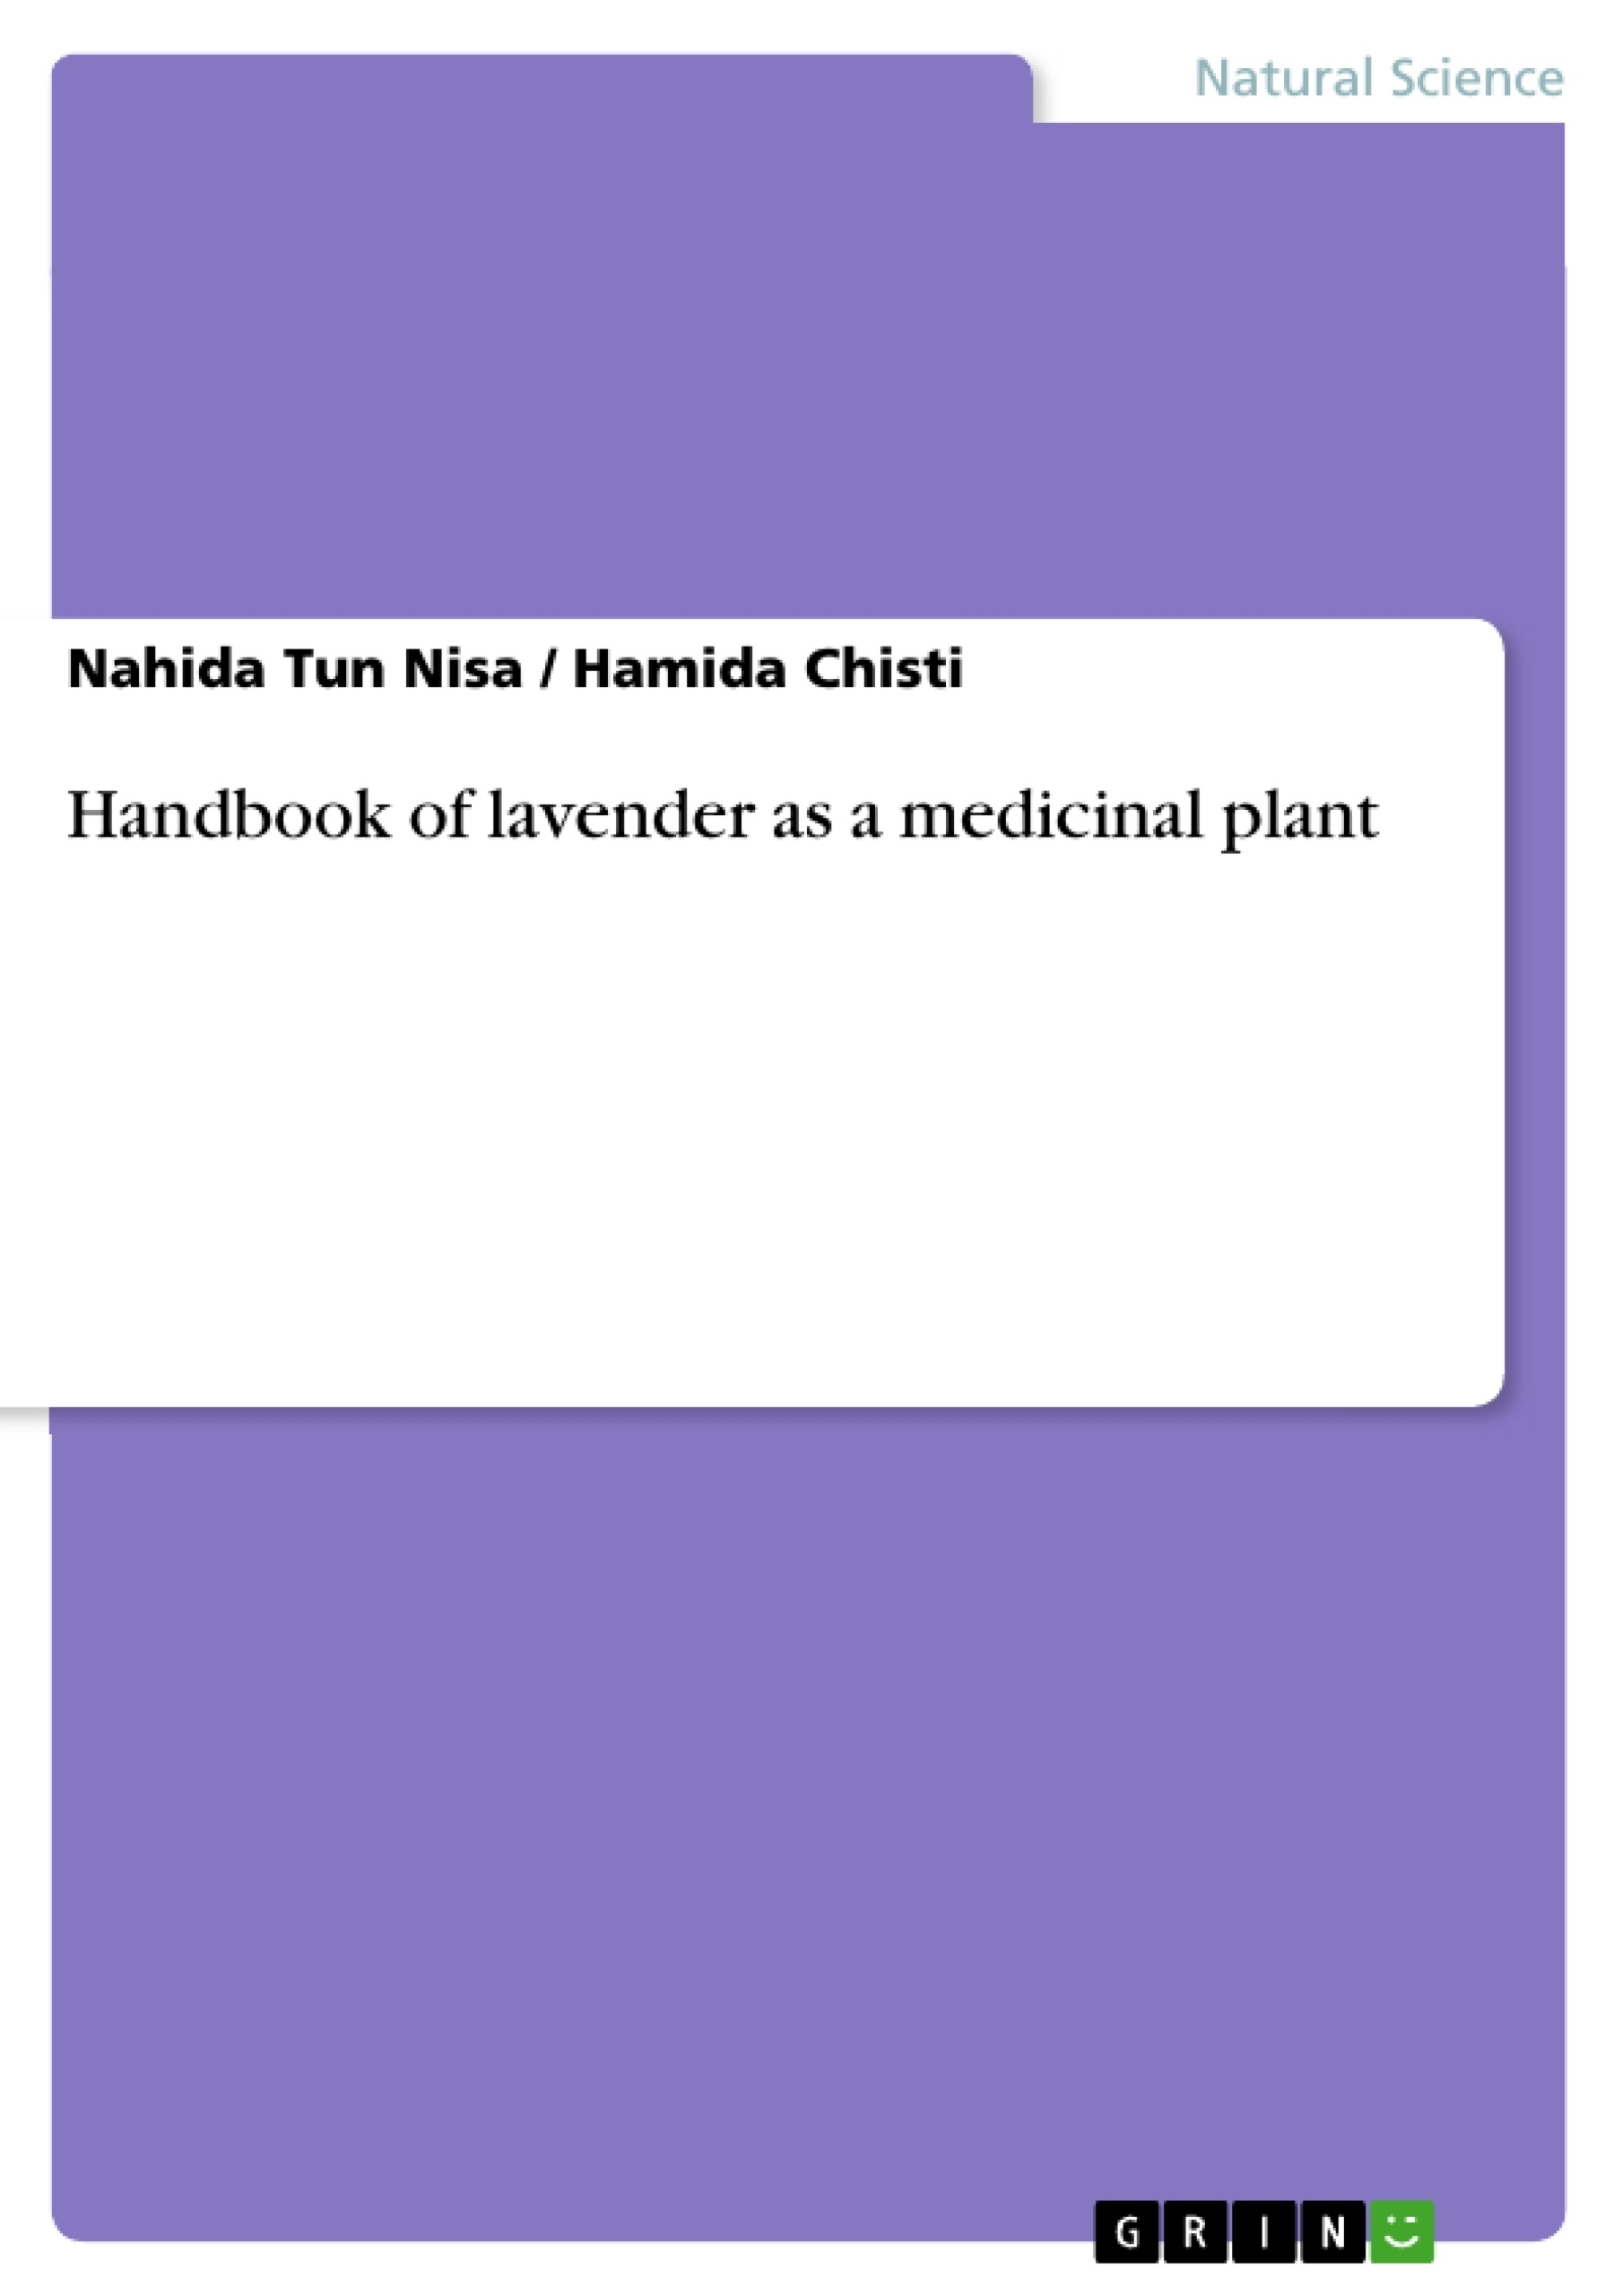 Title: Handbook of lavender as a medicinal plant